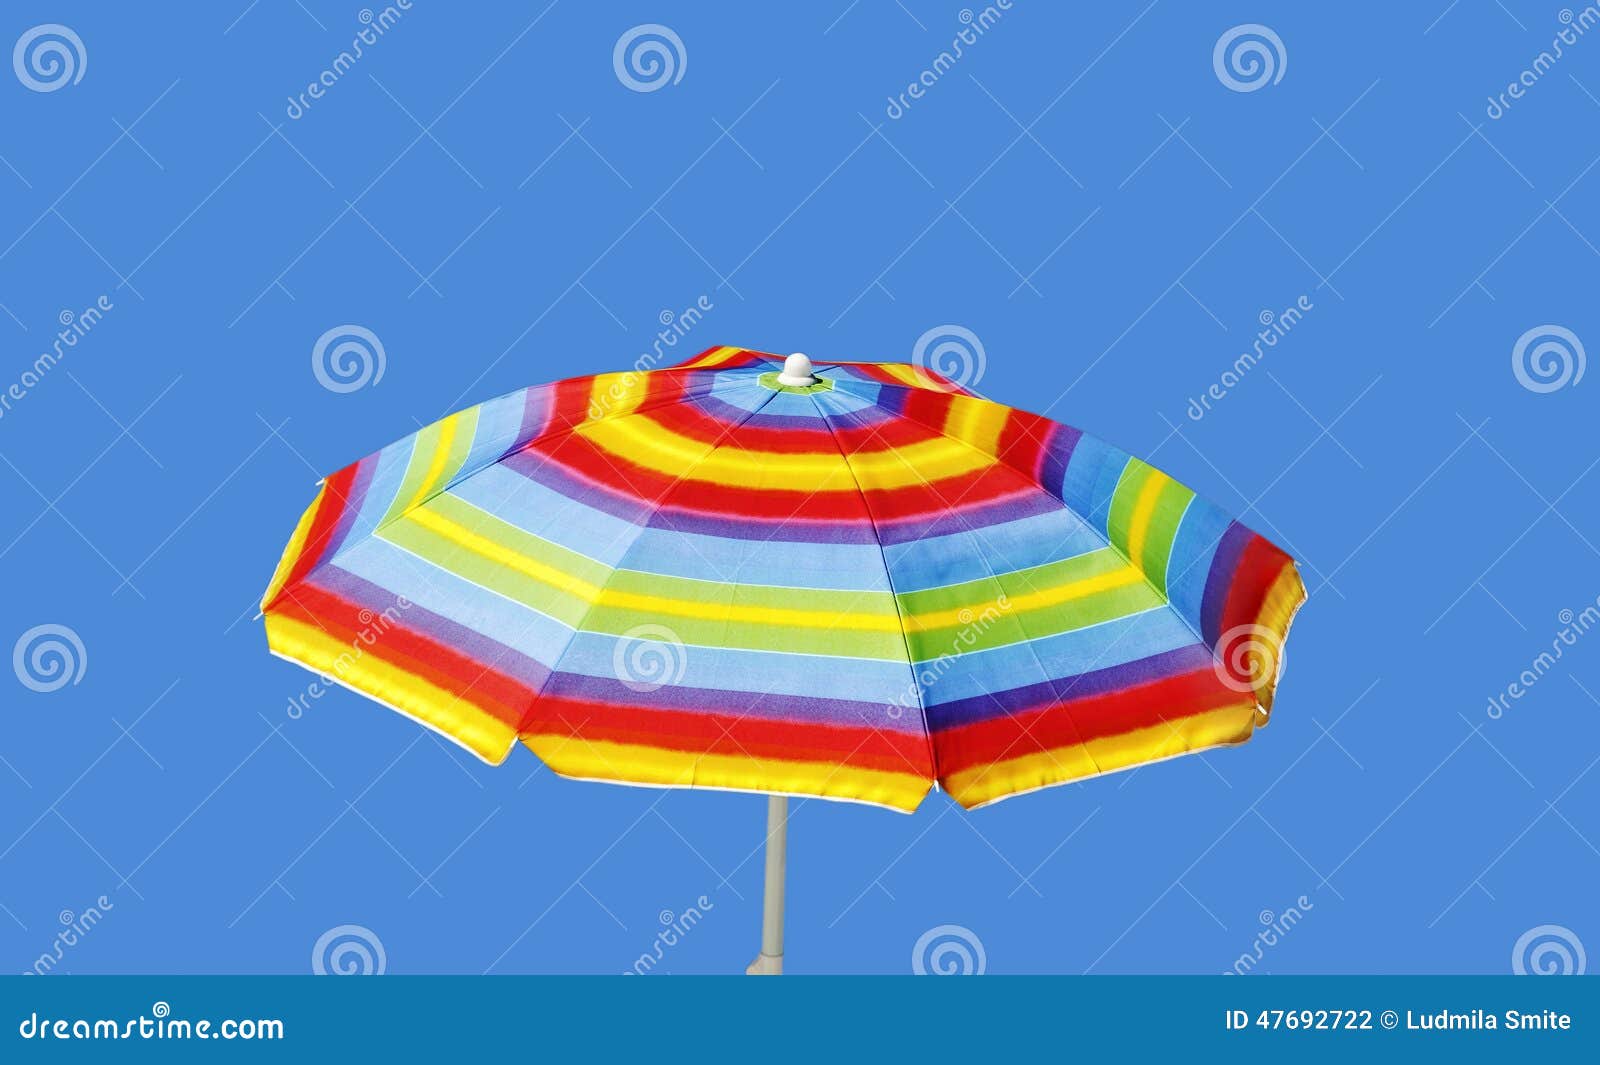 Sunny umbrella. stock photo. Image of background, resort - 47692722